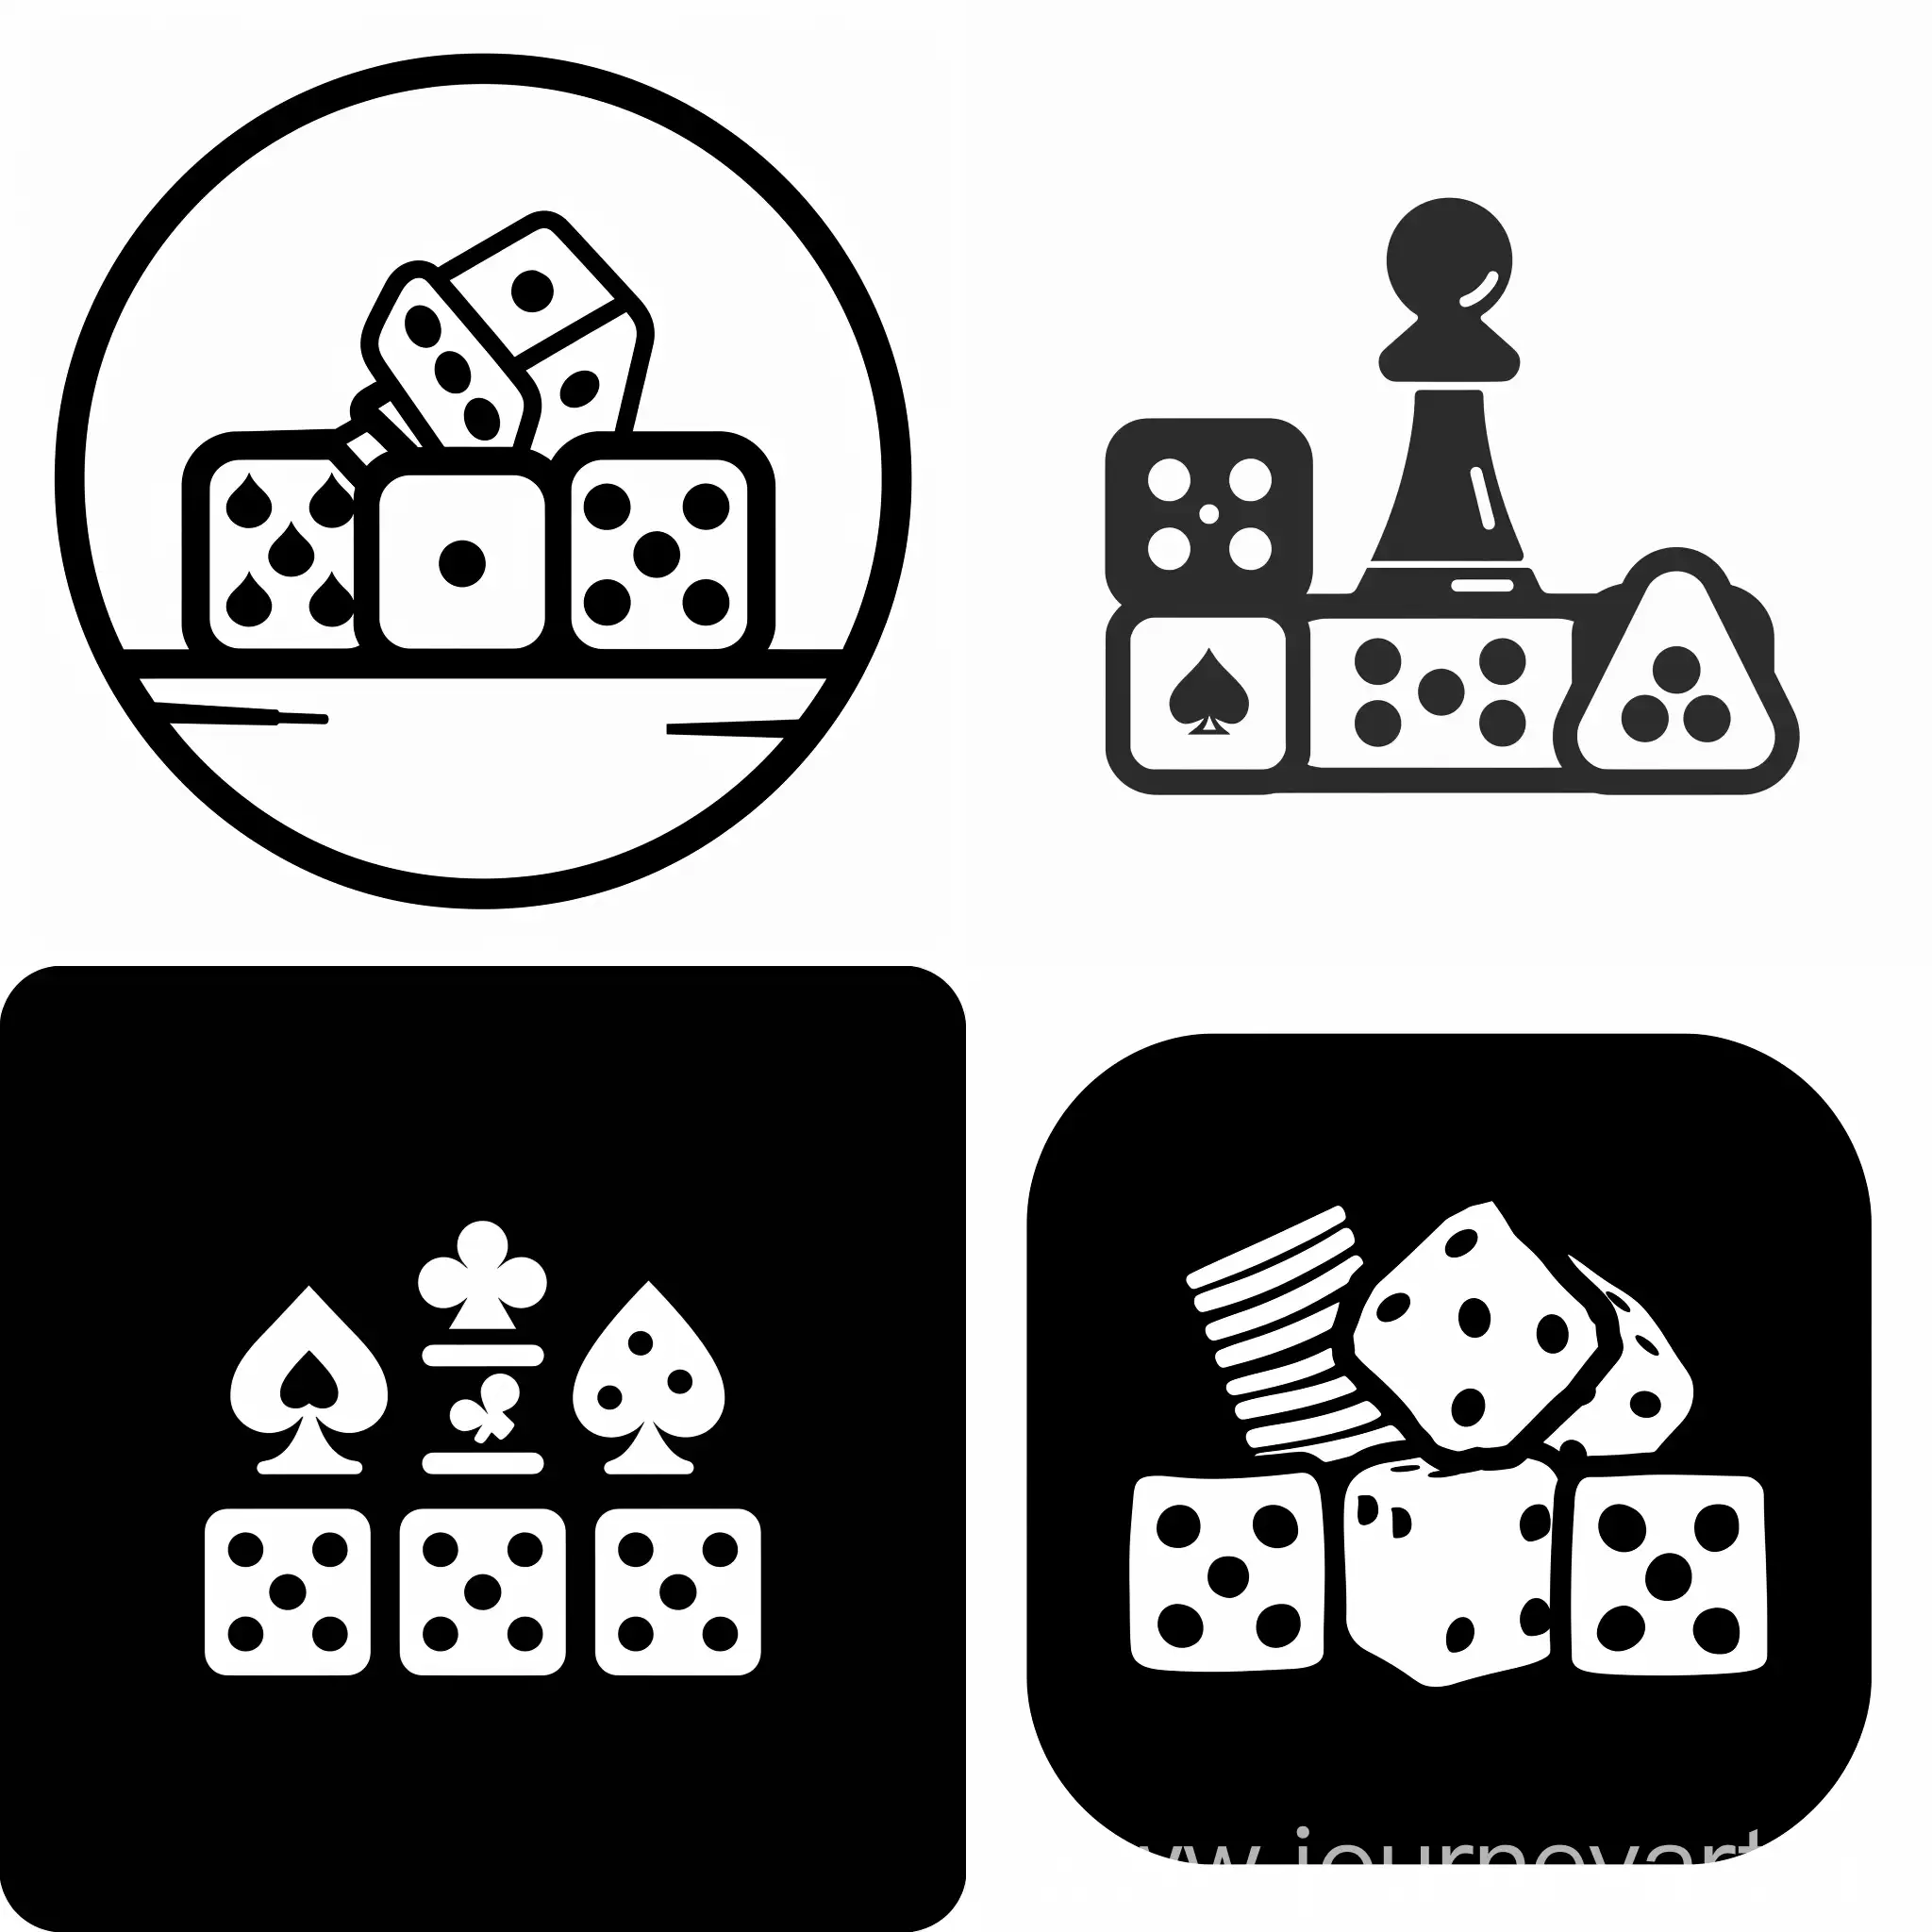 design a simple black and white icon which describes boardgames